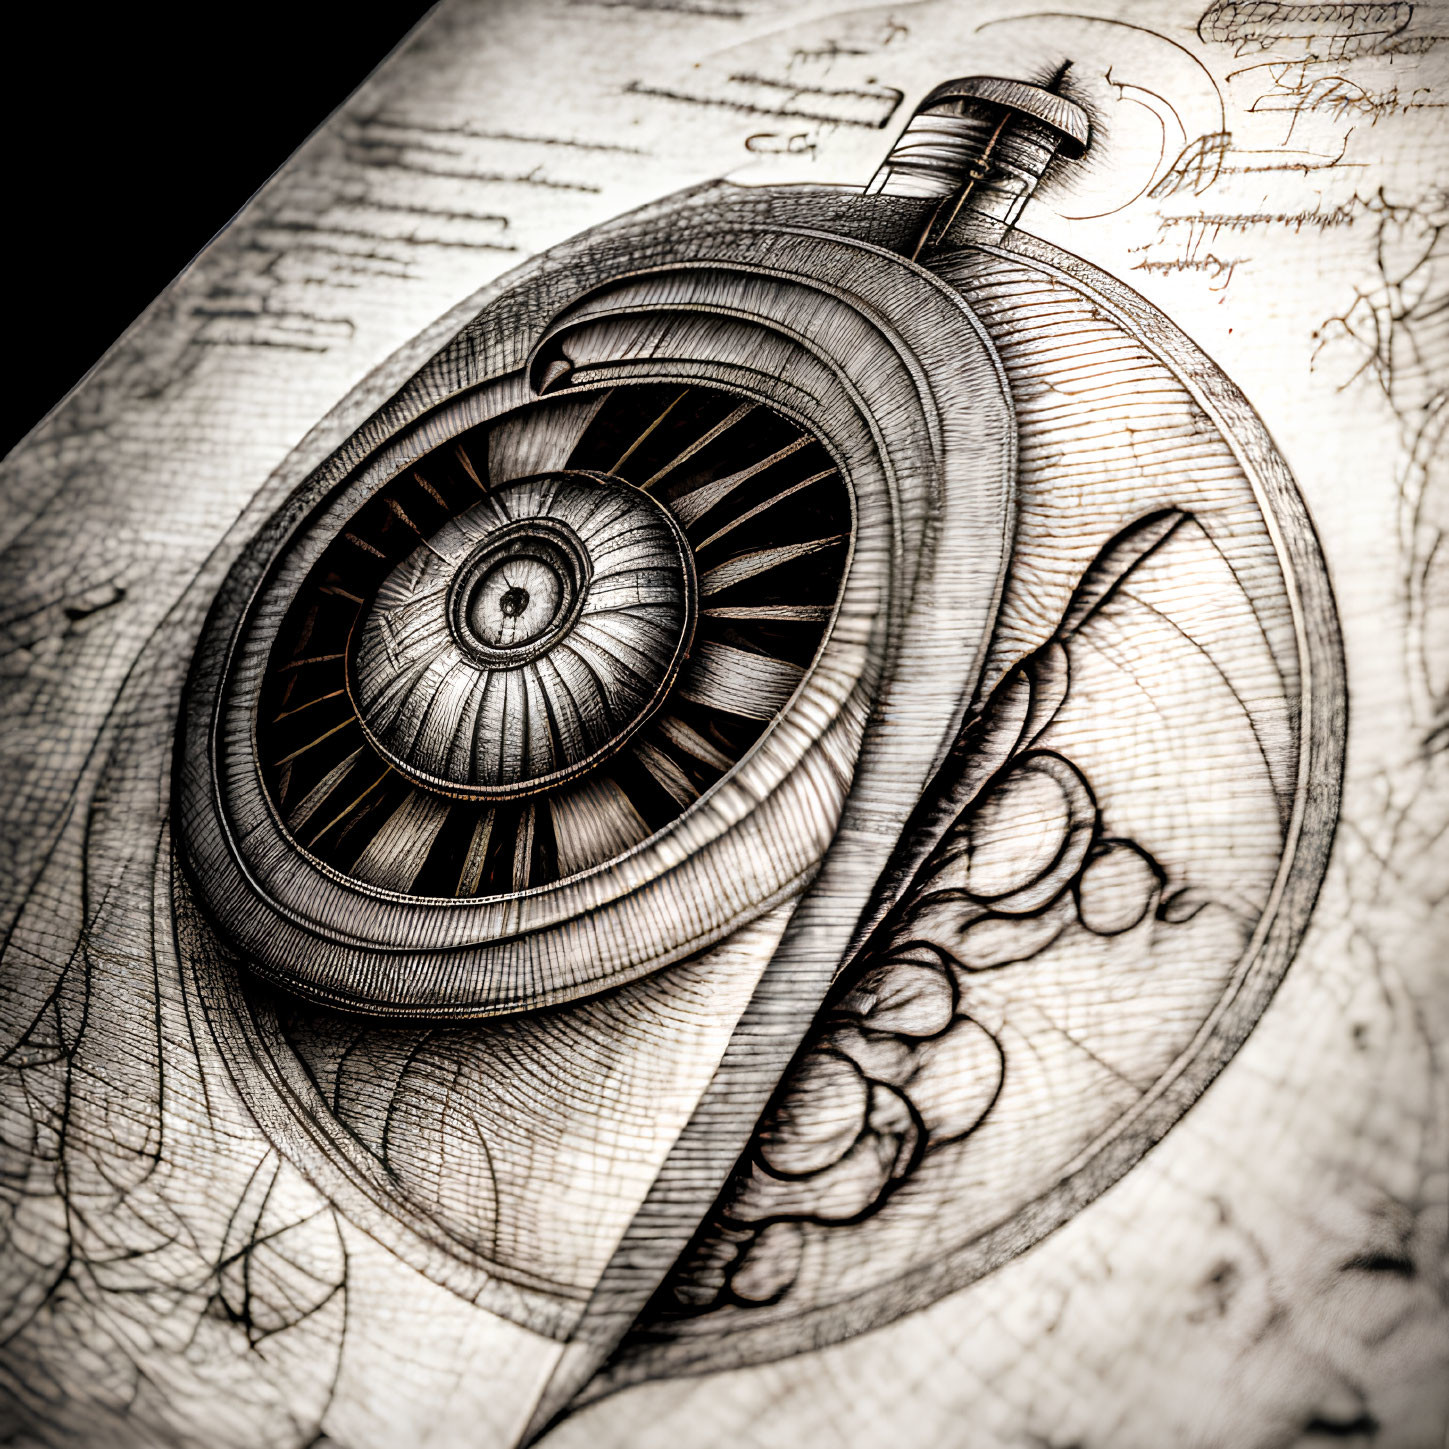 Detailed illustration of intricate pocket watch designs on vintage maps background